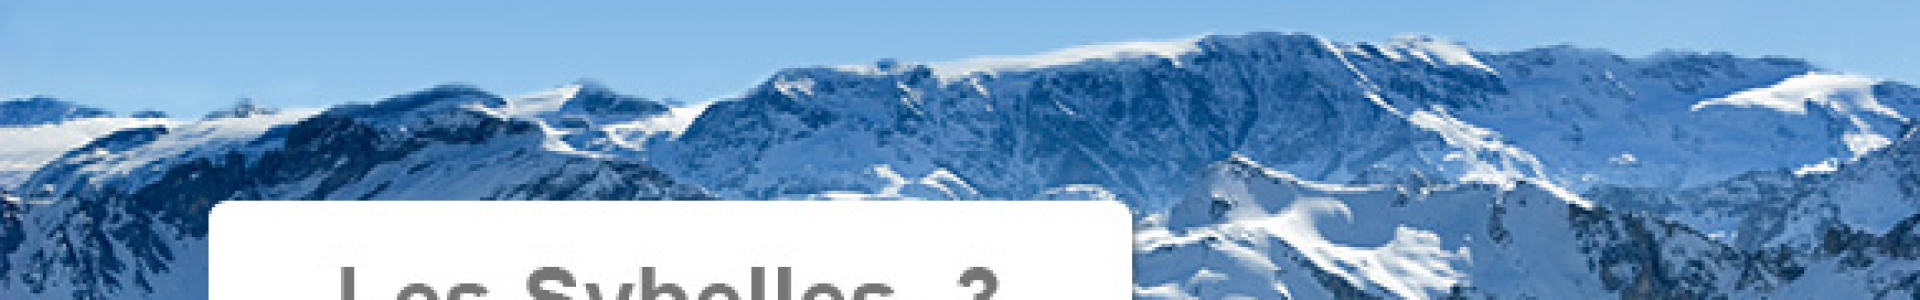 Madame Vacances : ski, promo locations 8j/7n grands domaines skiables, jusqu'à - 50%